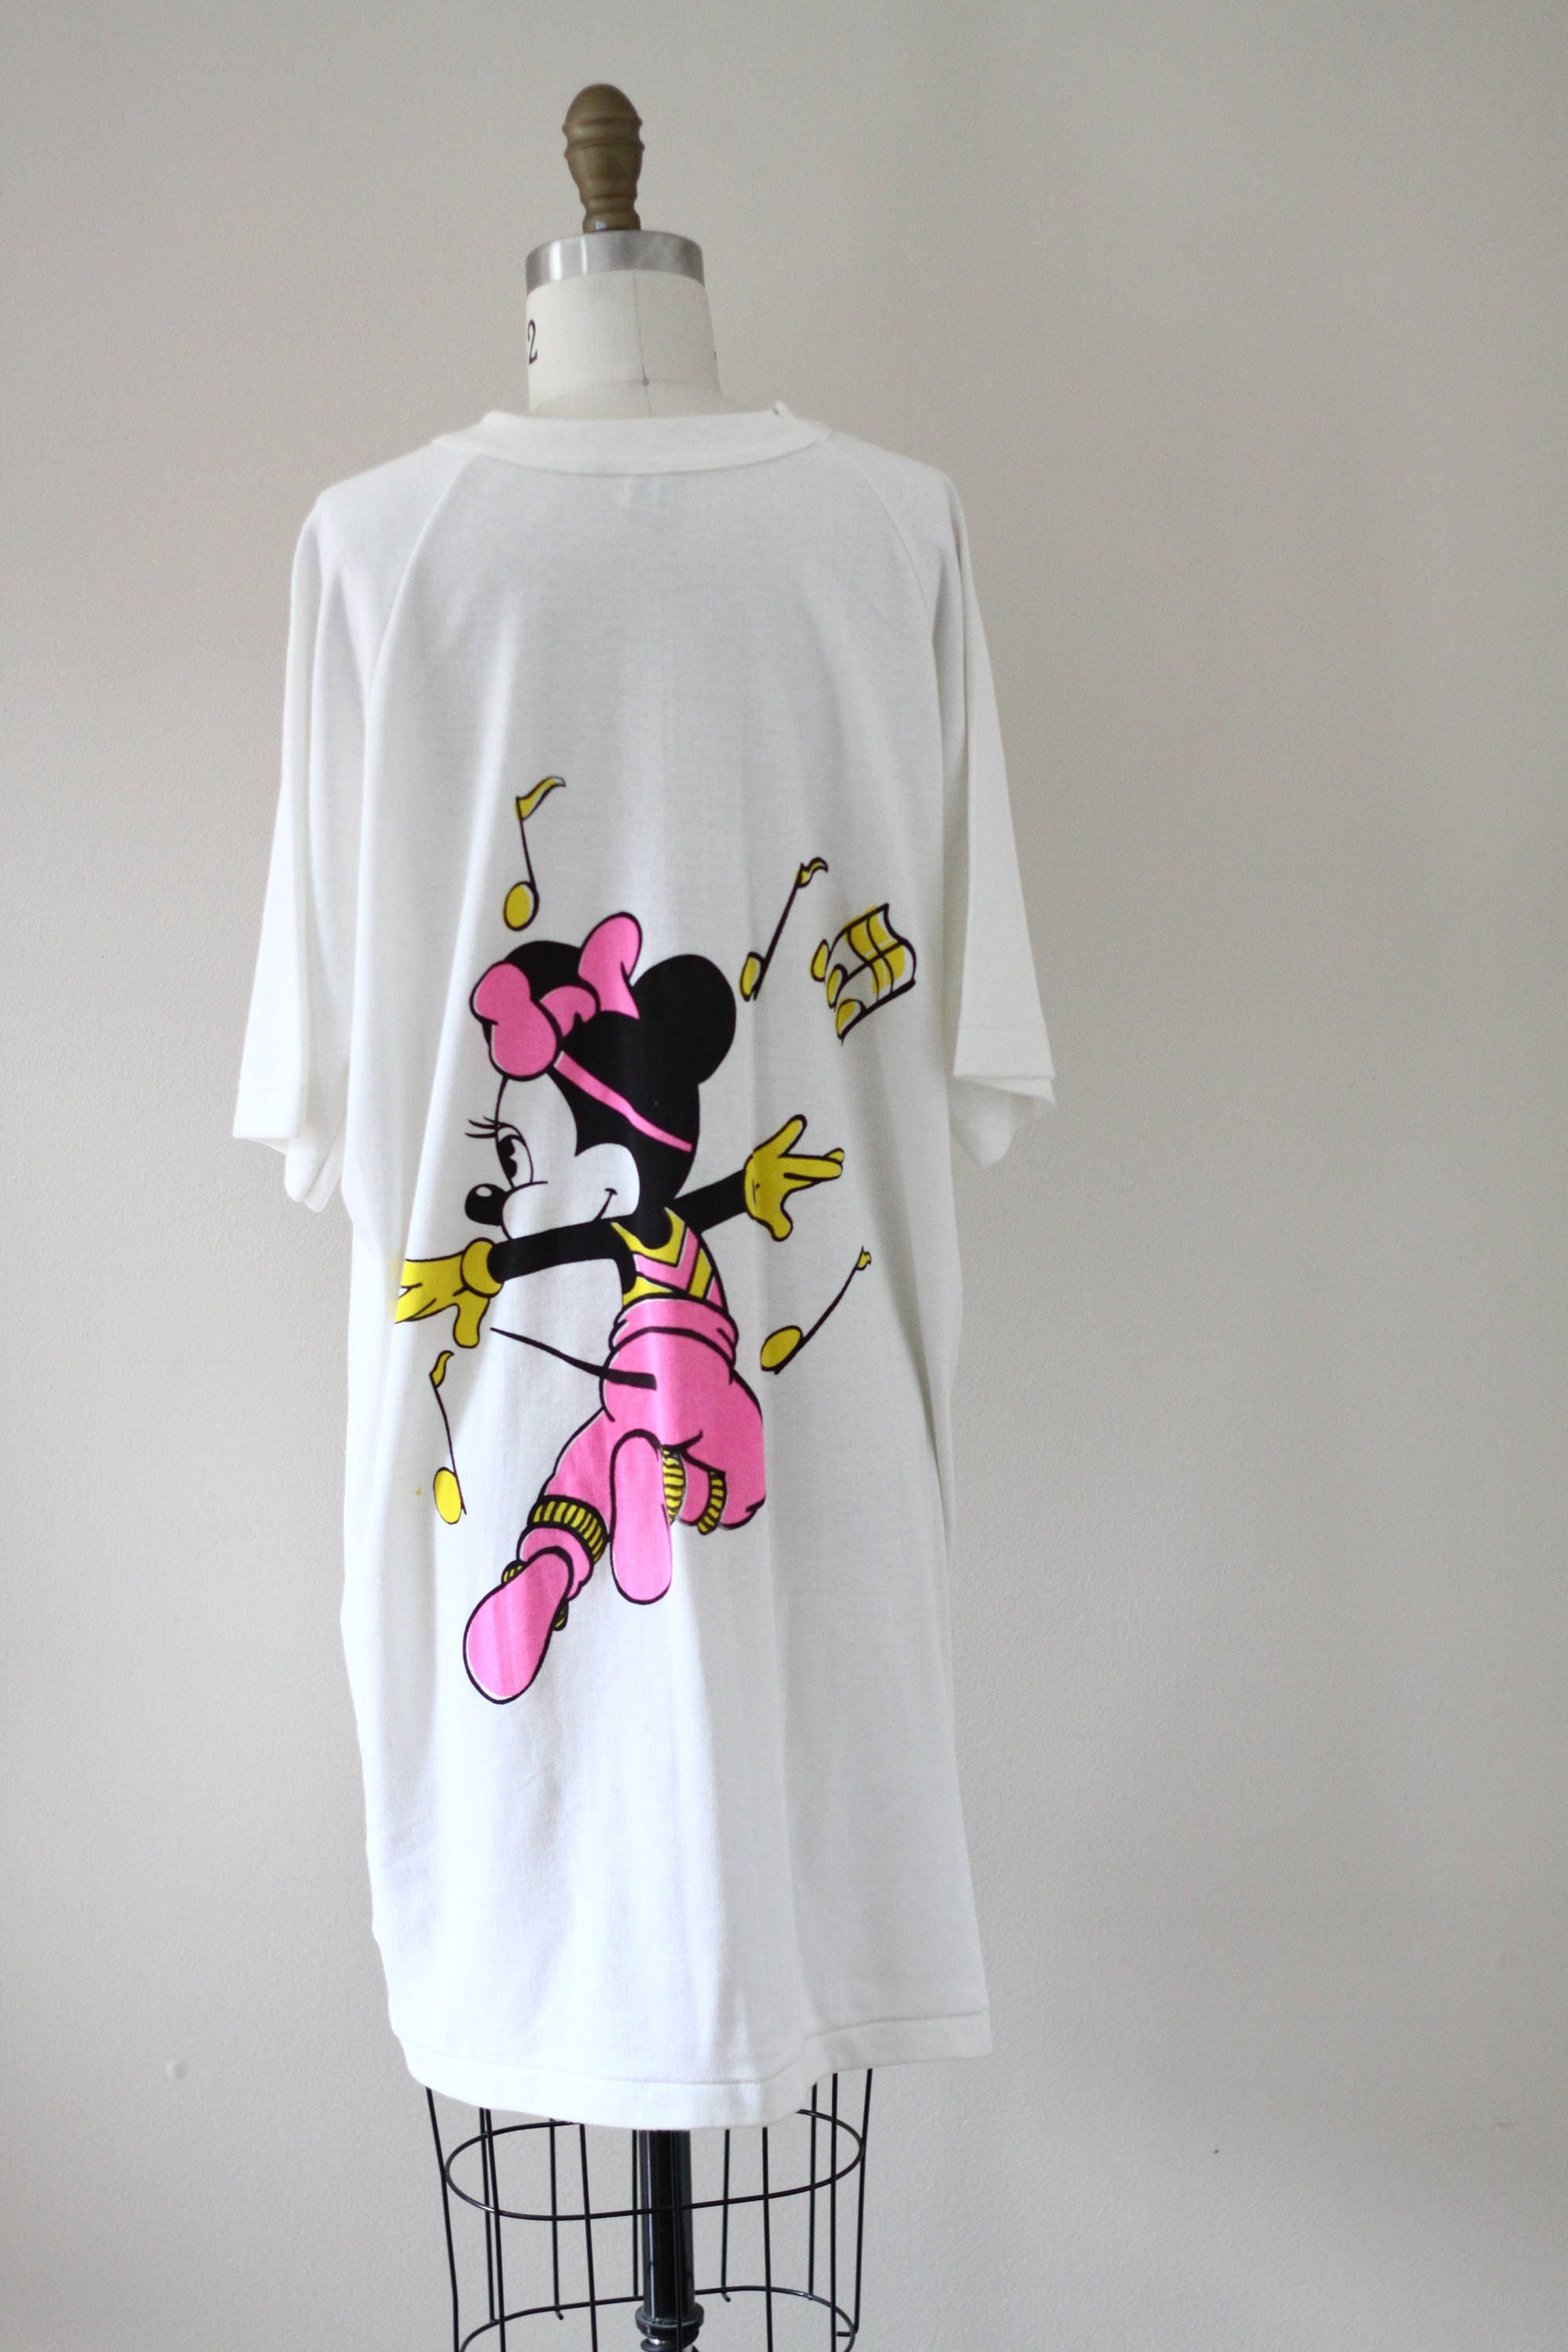 1980s Minnie Mouse shirt dress // Disney tshirt dress